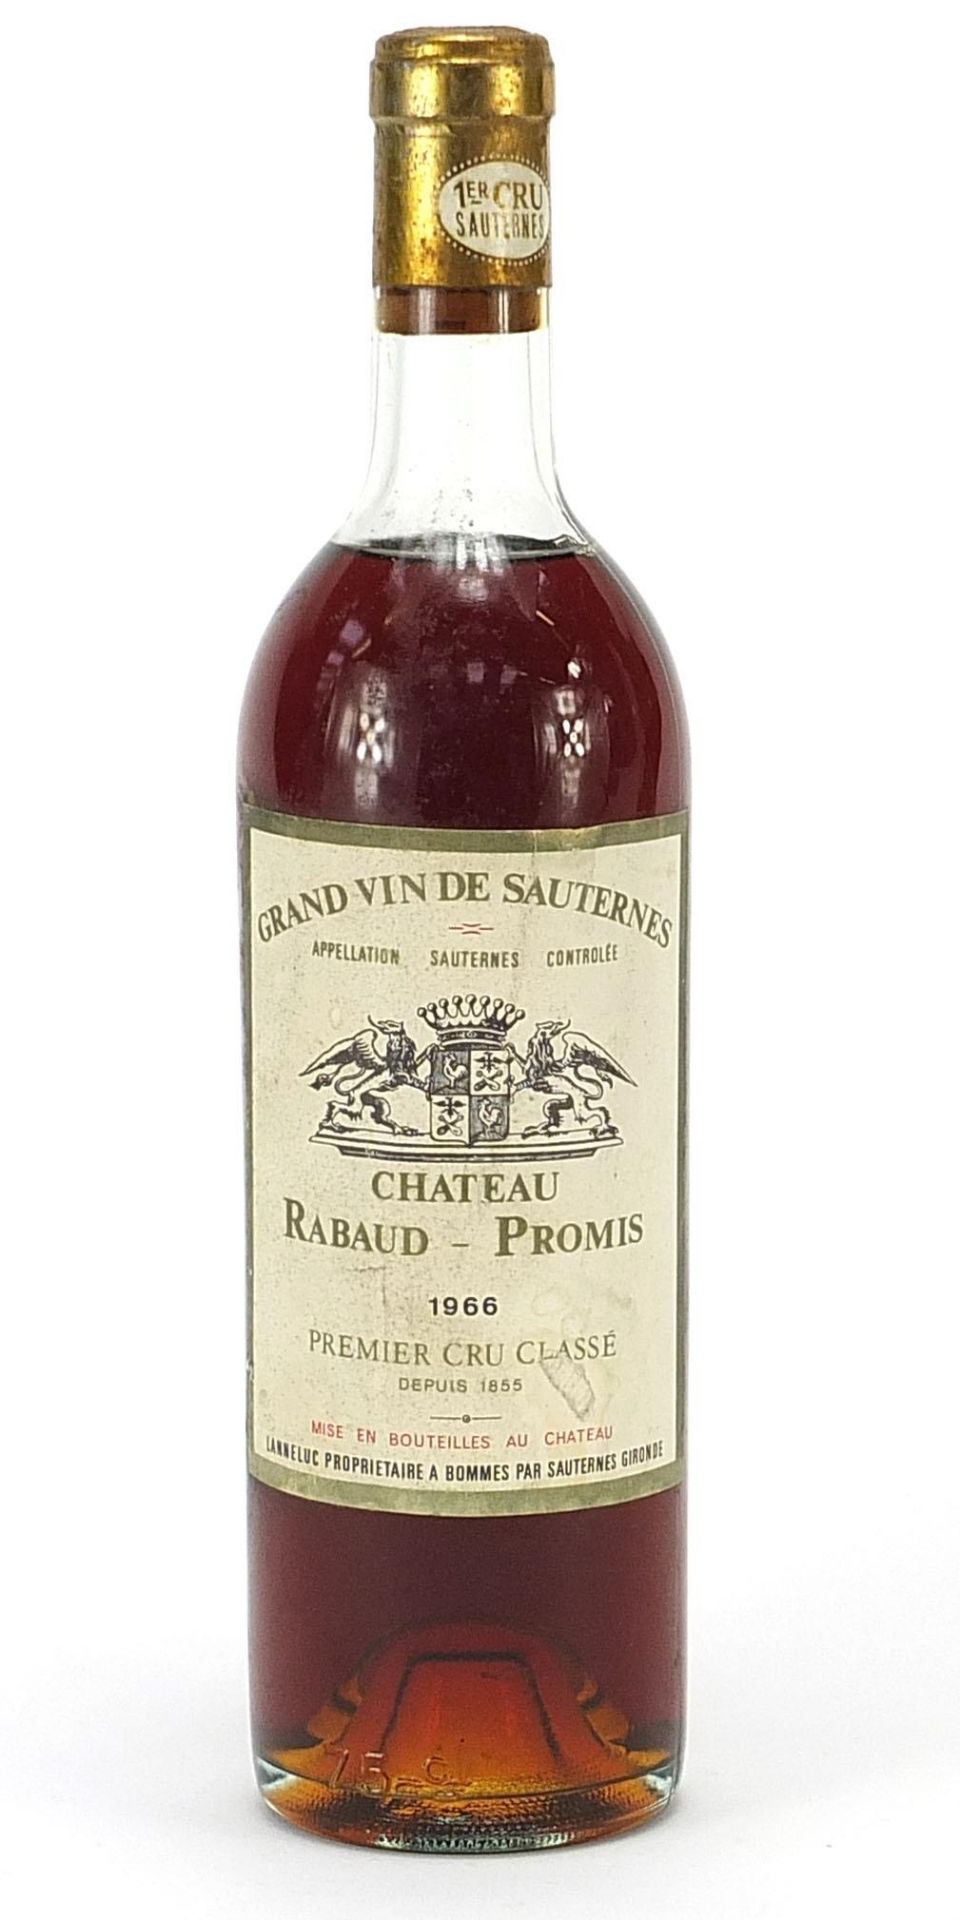 Bottle of 1966 Chateau Rabaud Promis Sauternes